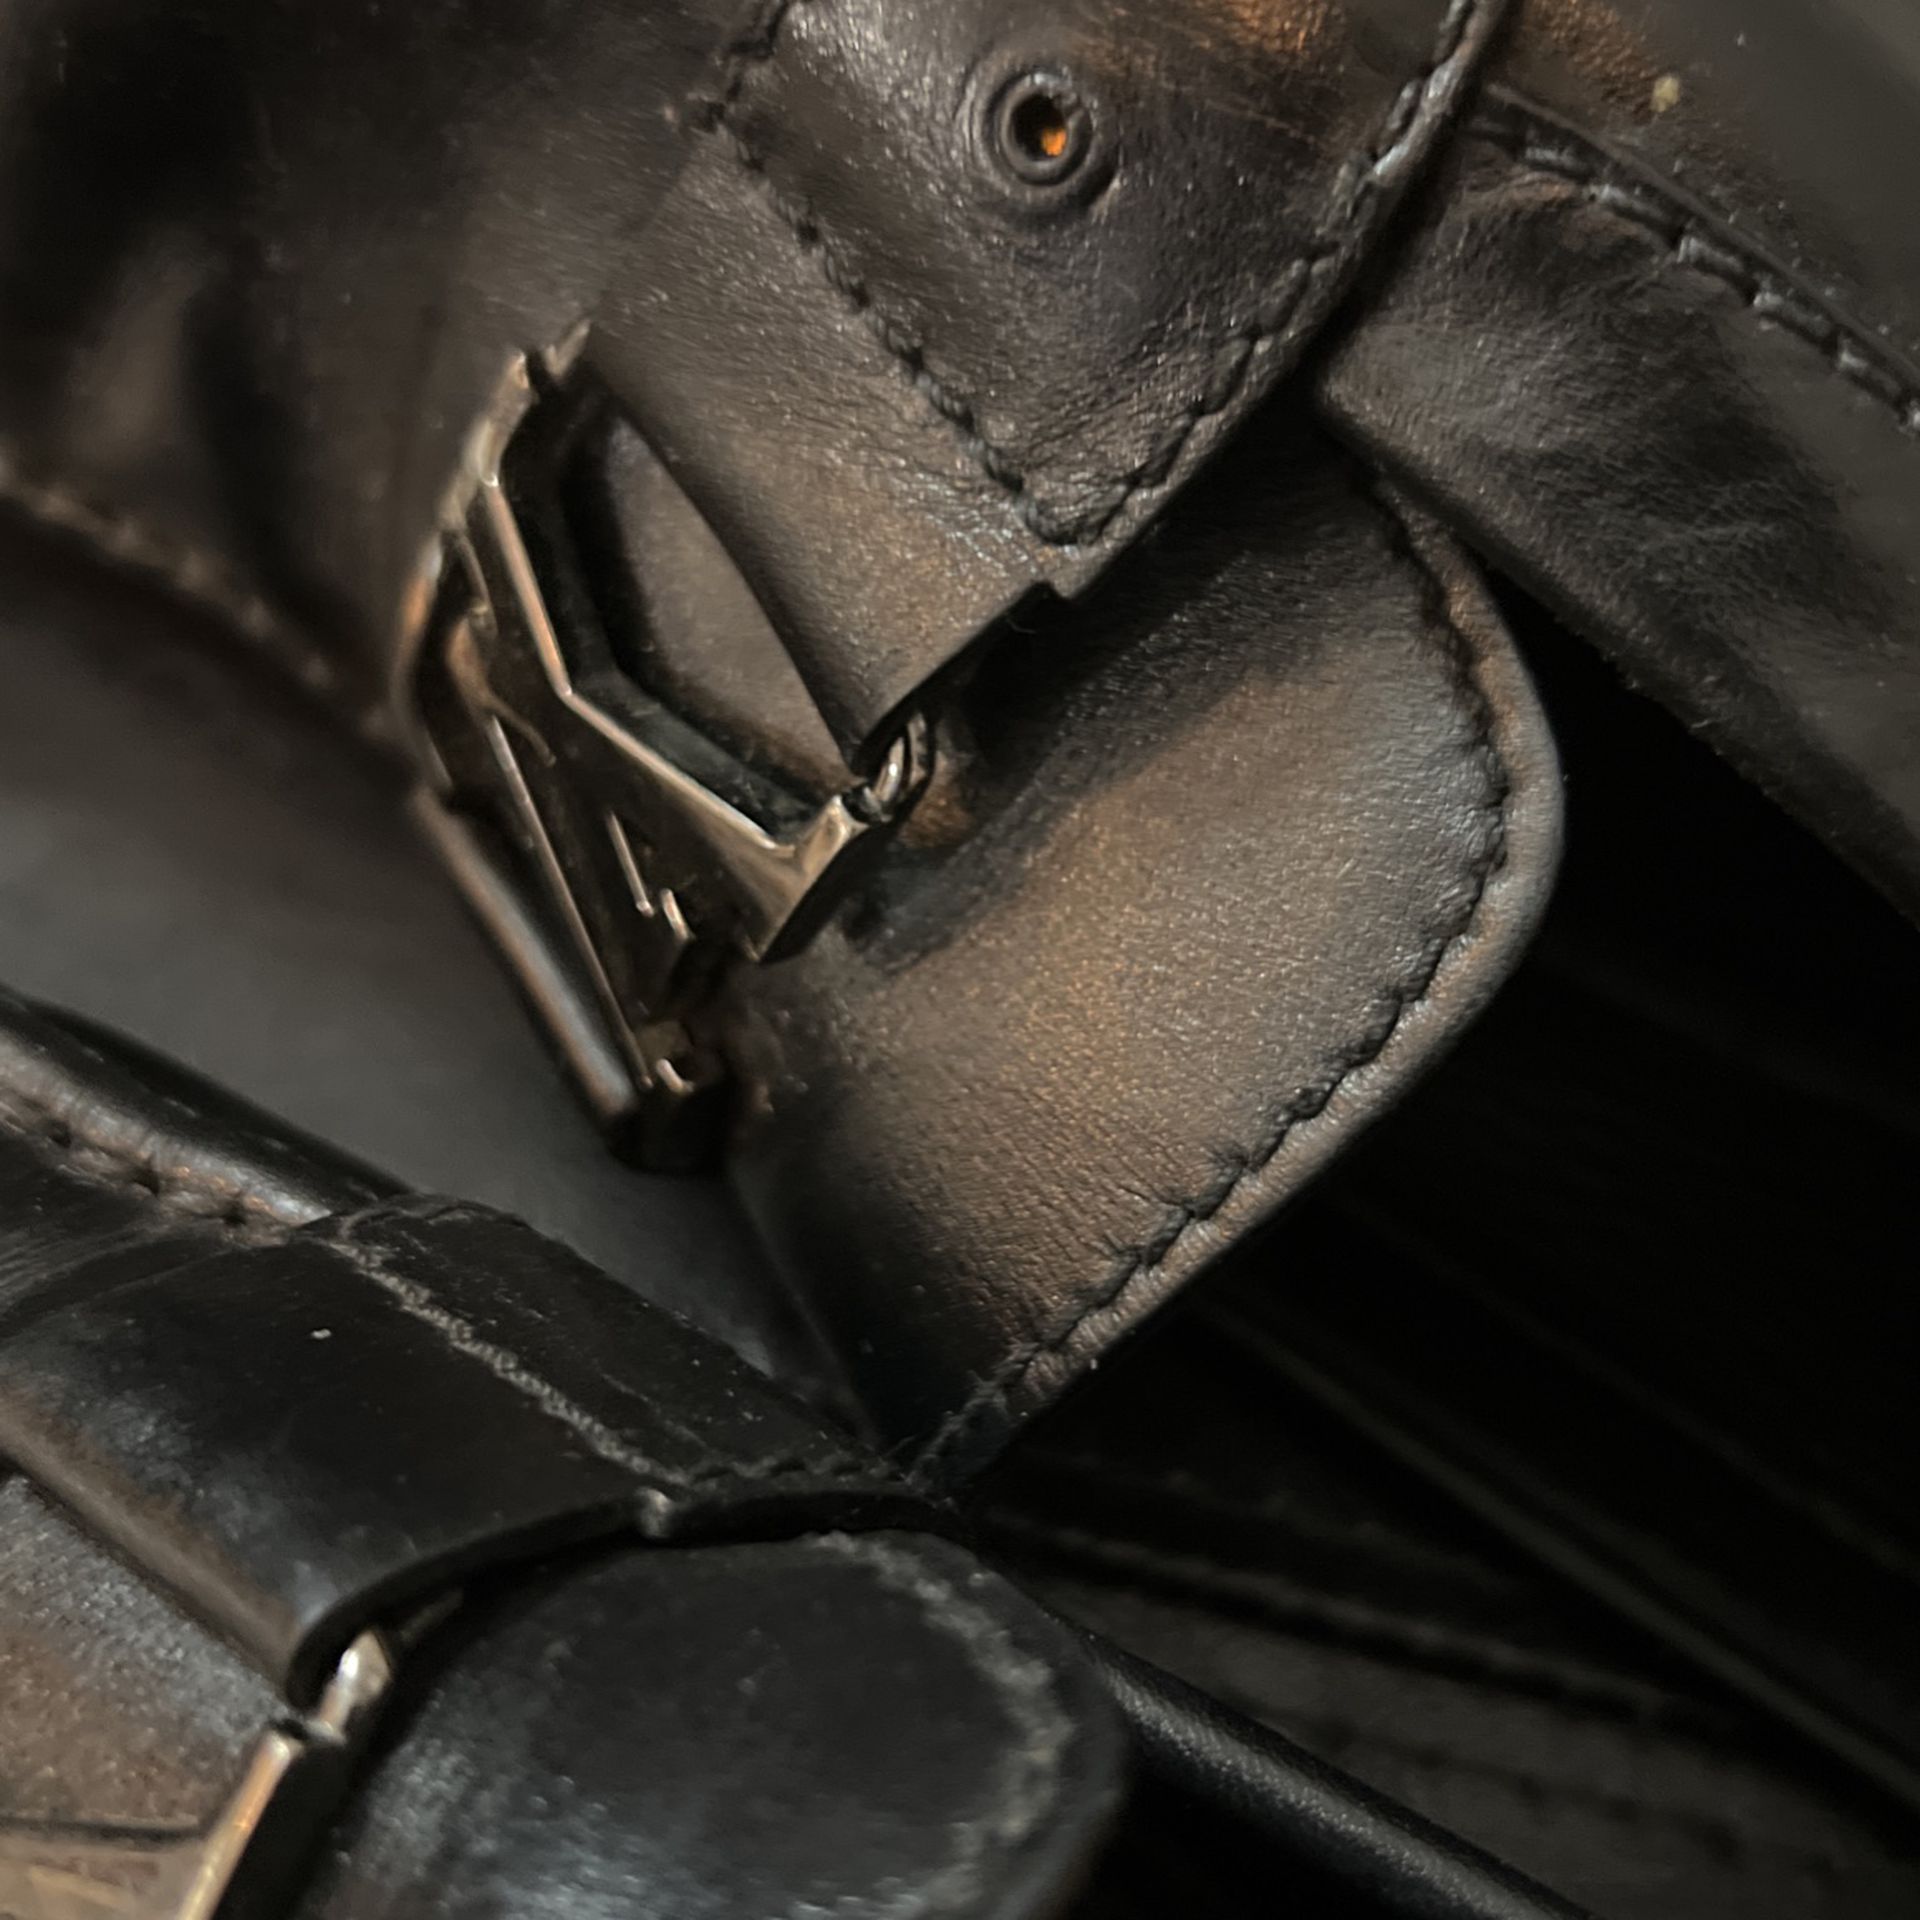 Louis Vuitton - Monte Carlo Leather Men Moccasins Brown 6